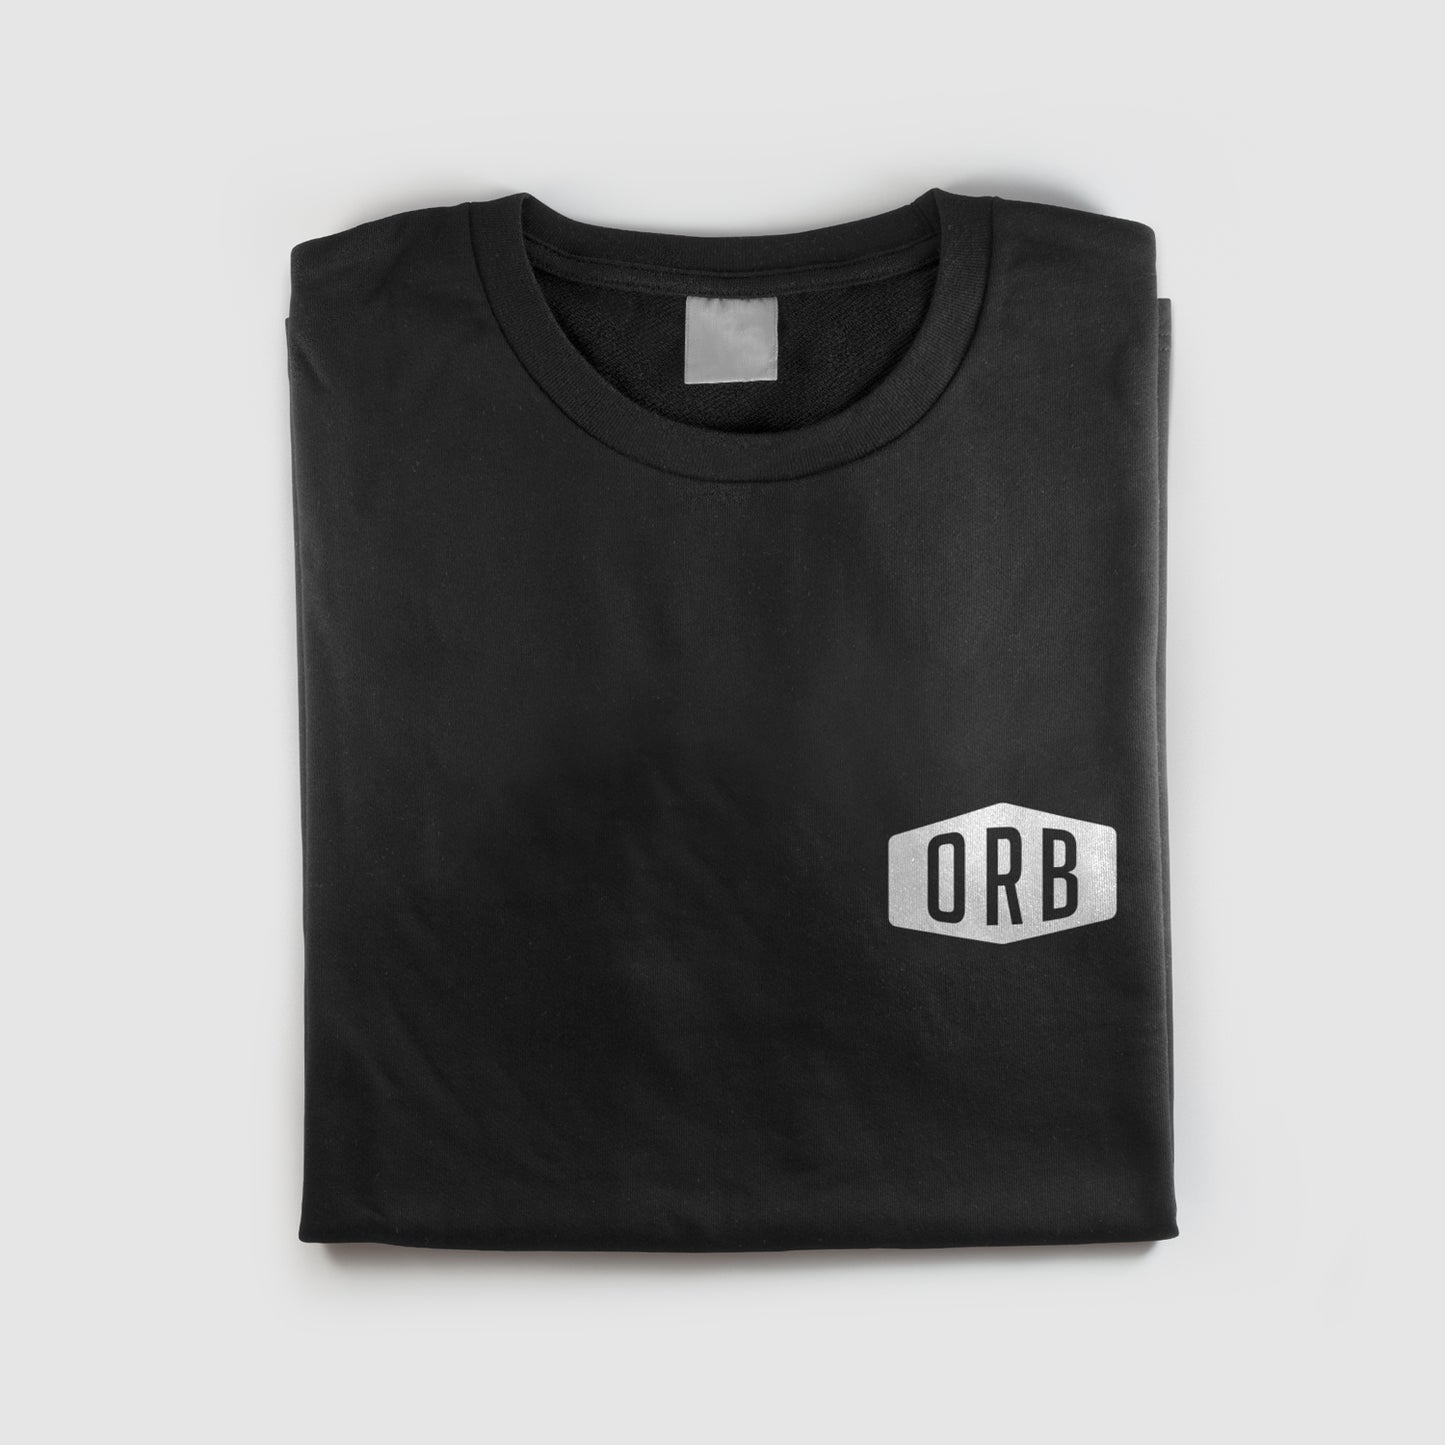 ORB Badass off-road bedding